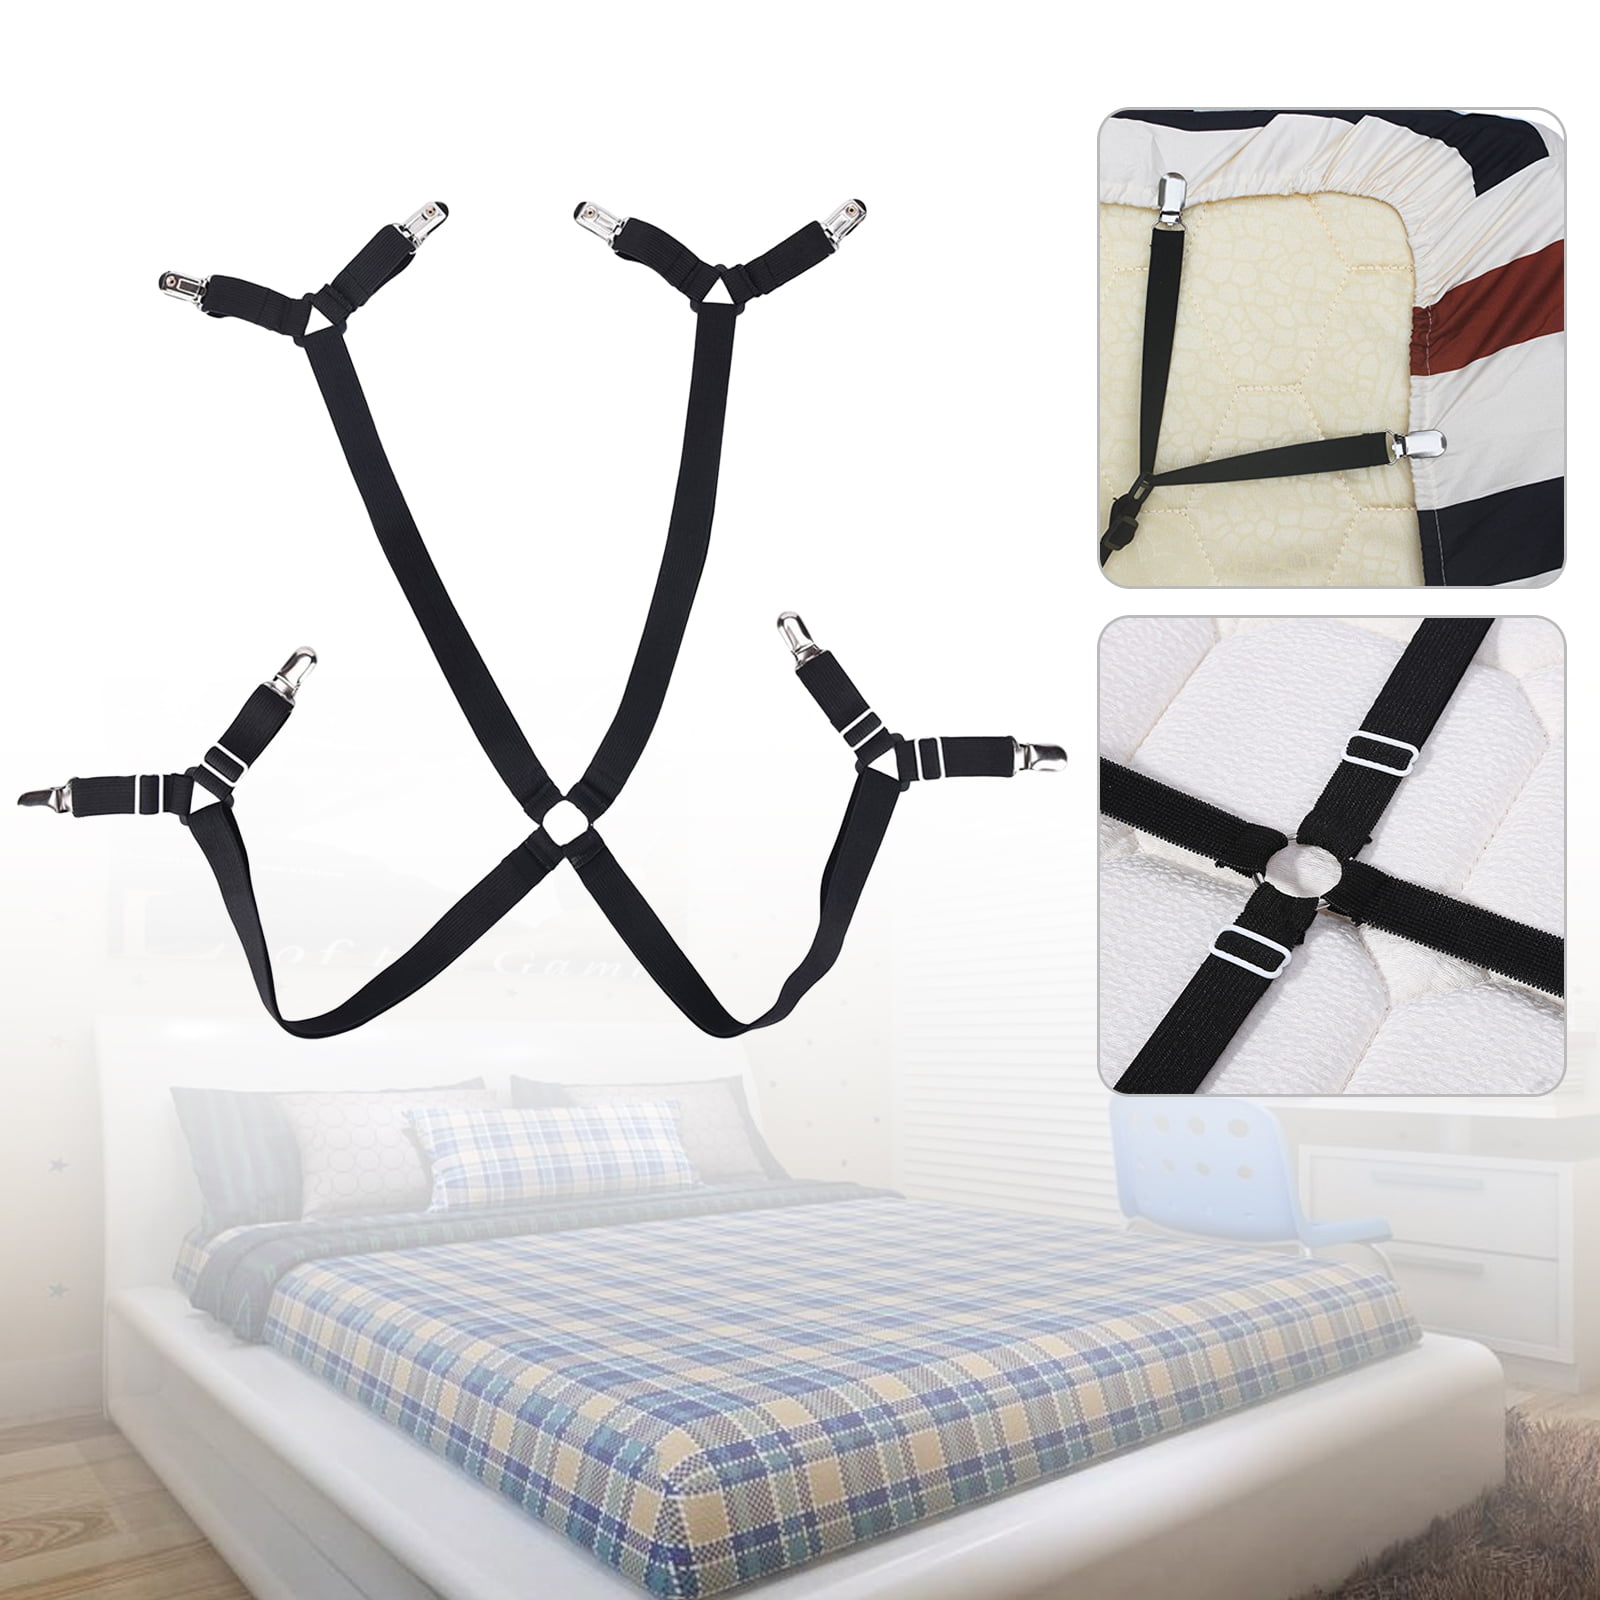 Crisscross Bed Fitted Sheet Clips Suspenders Gripper Fastener Adjustable Home LK 